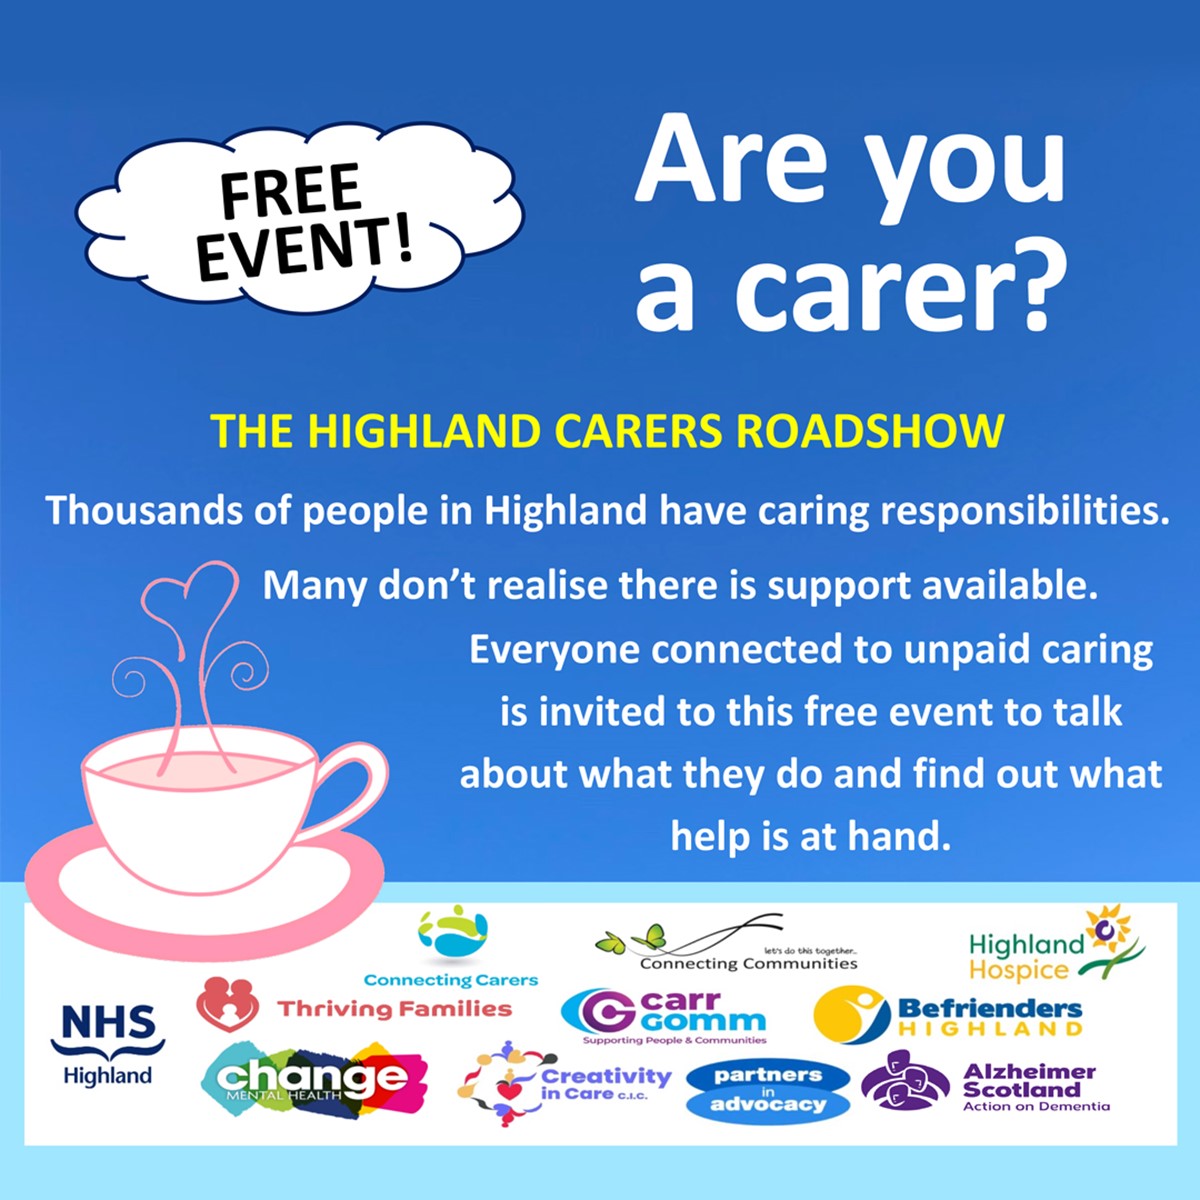 Are you a carer? The Highland Carers Roadshow